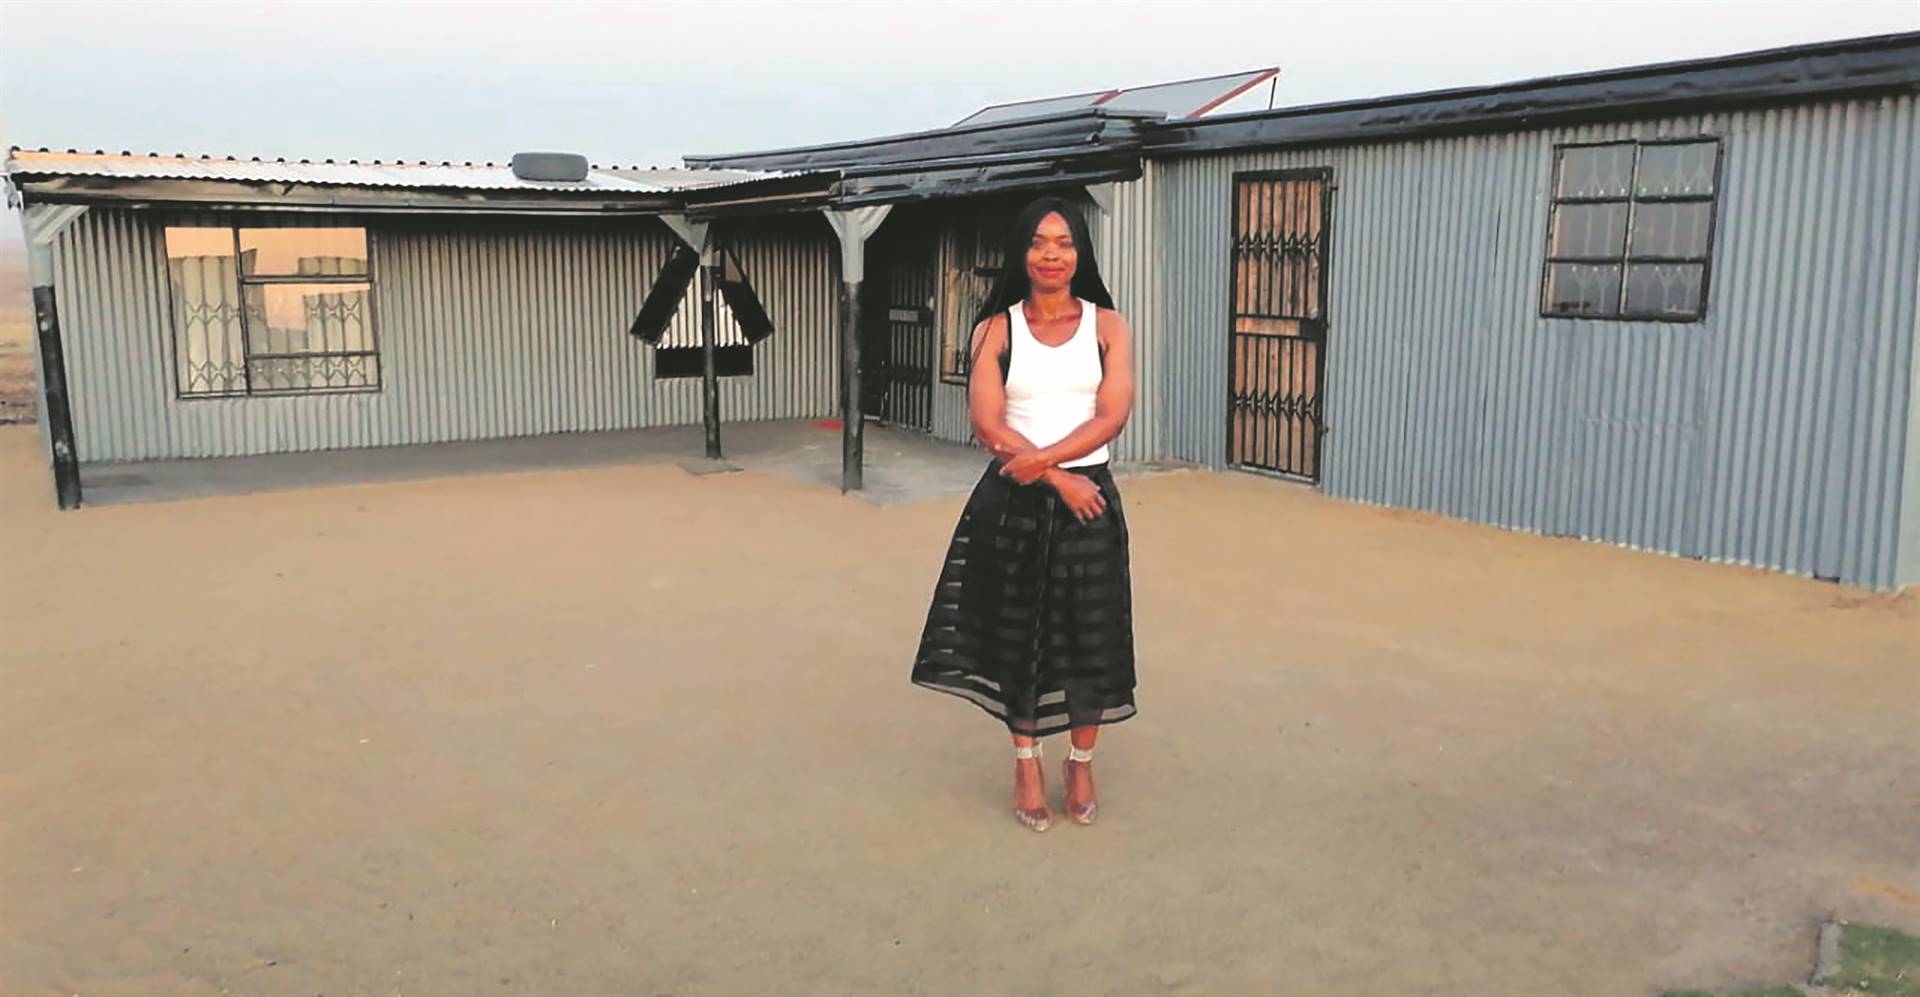 Ningi Nyambose has worked hard to make her shack beautiful.